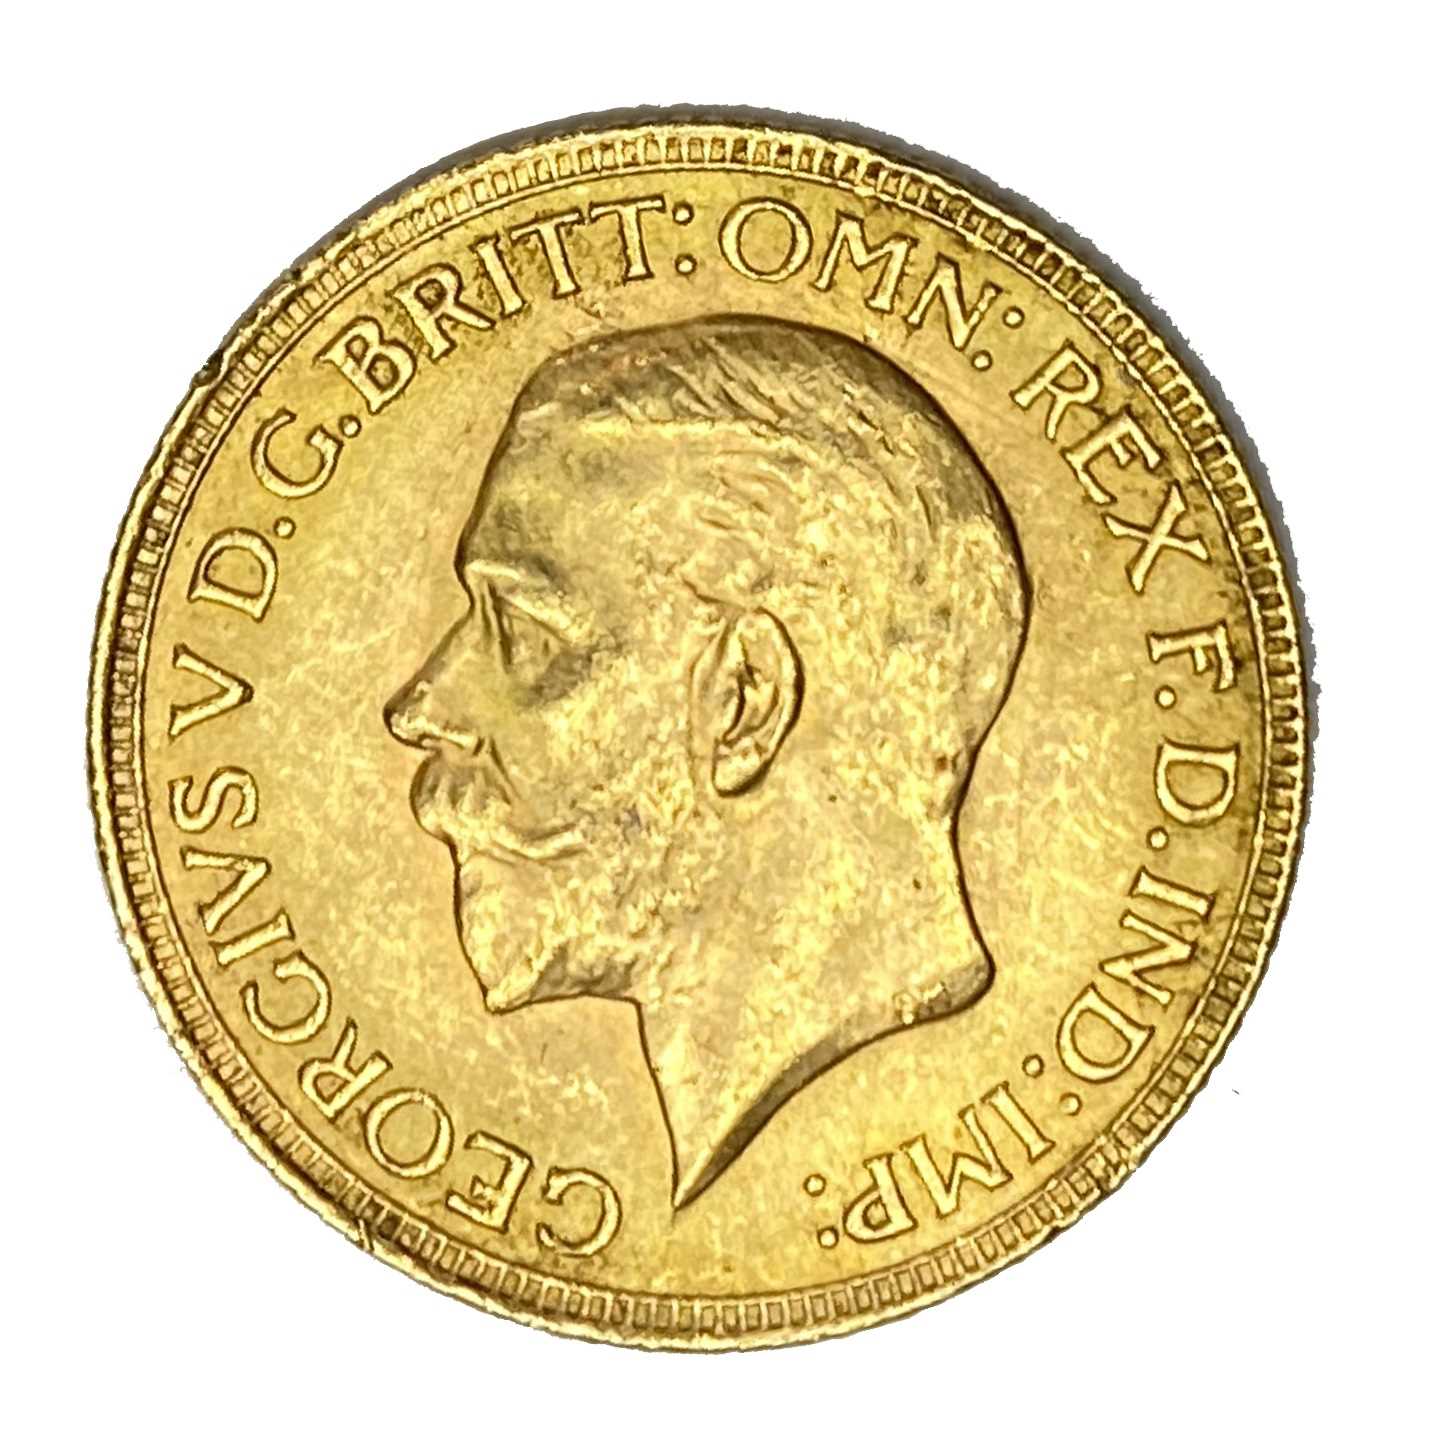 Lot 59 - George V gold Sovereign coin, 1930, Pretoria mint